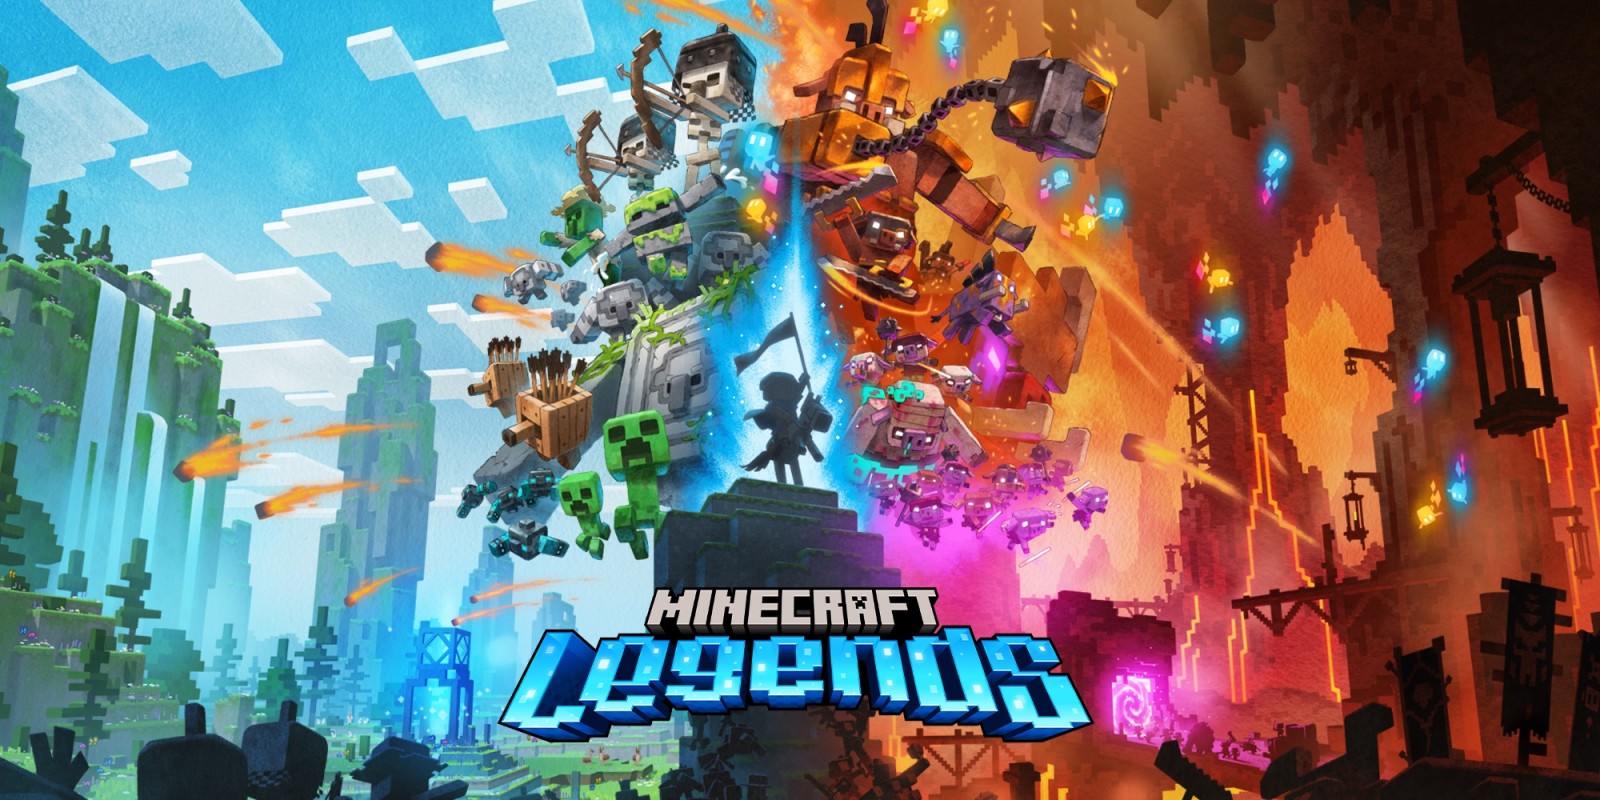 Promotional image of minecraft legends